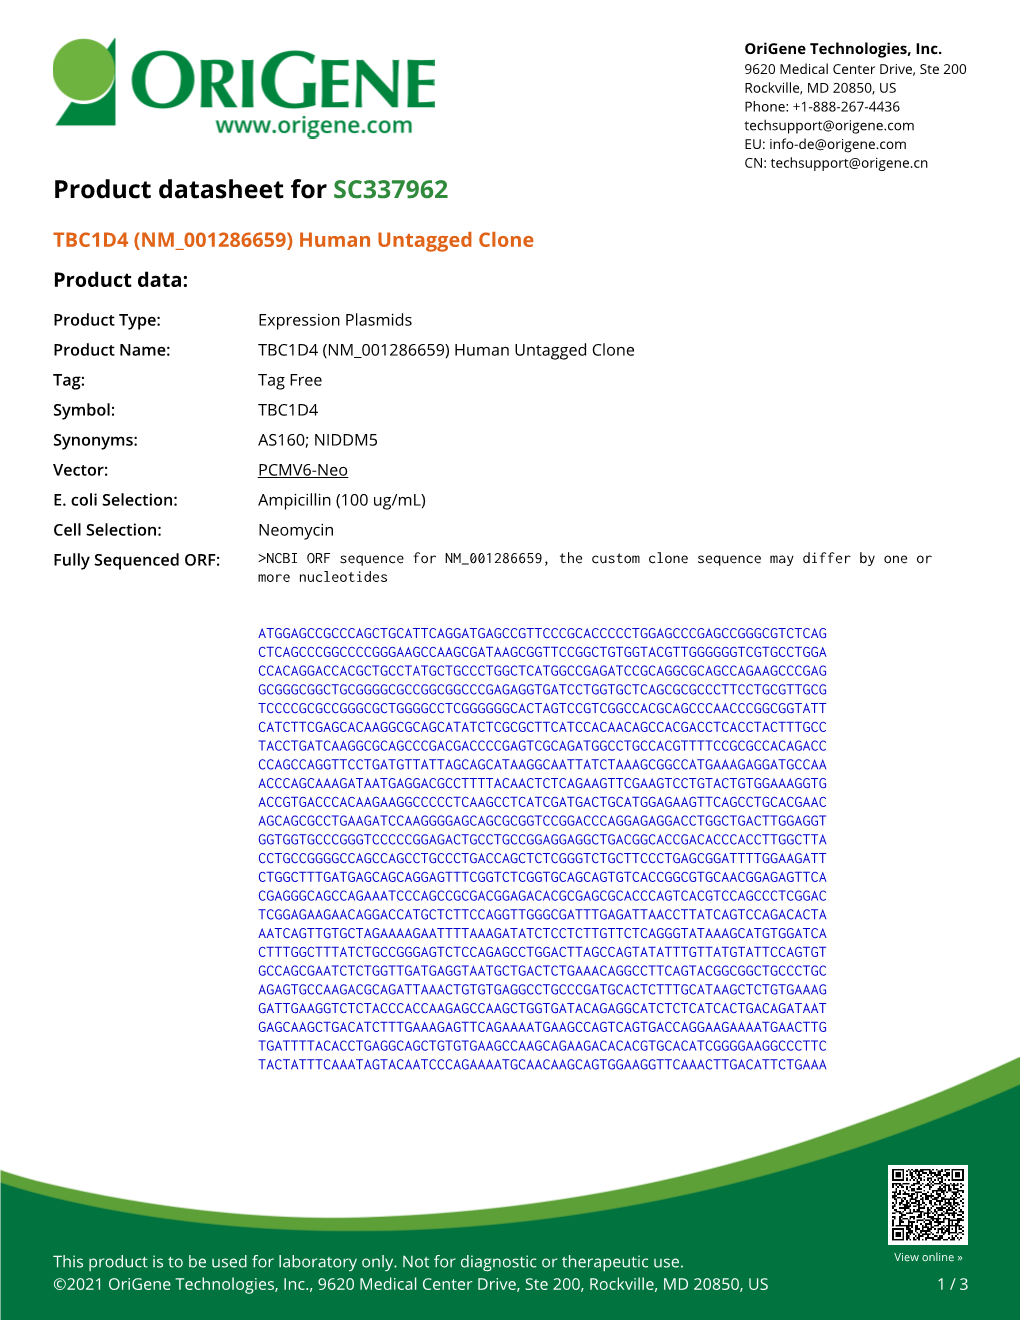 TBC1D4 (NM 001286659) Human Untagged Clone Product Data